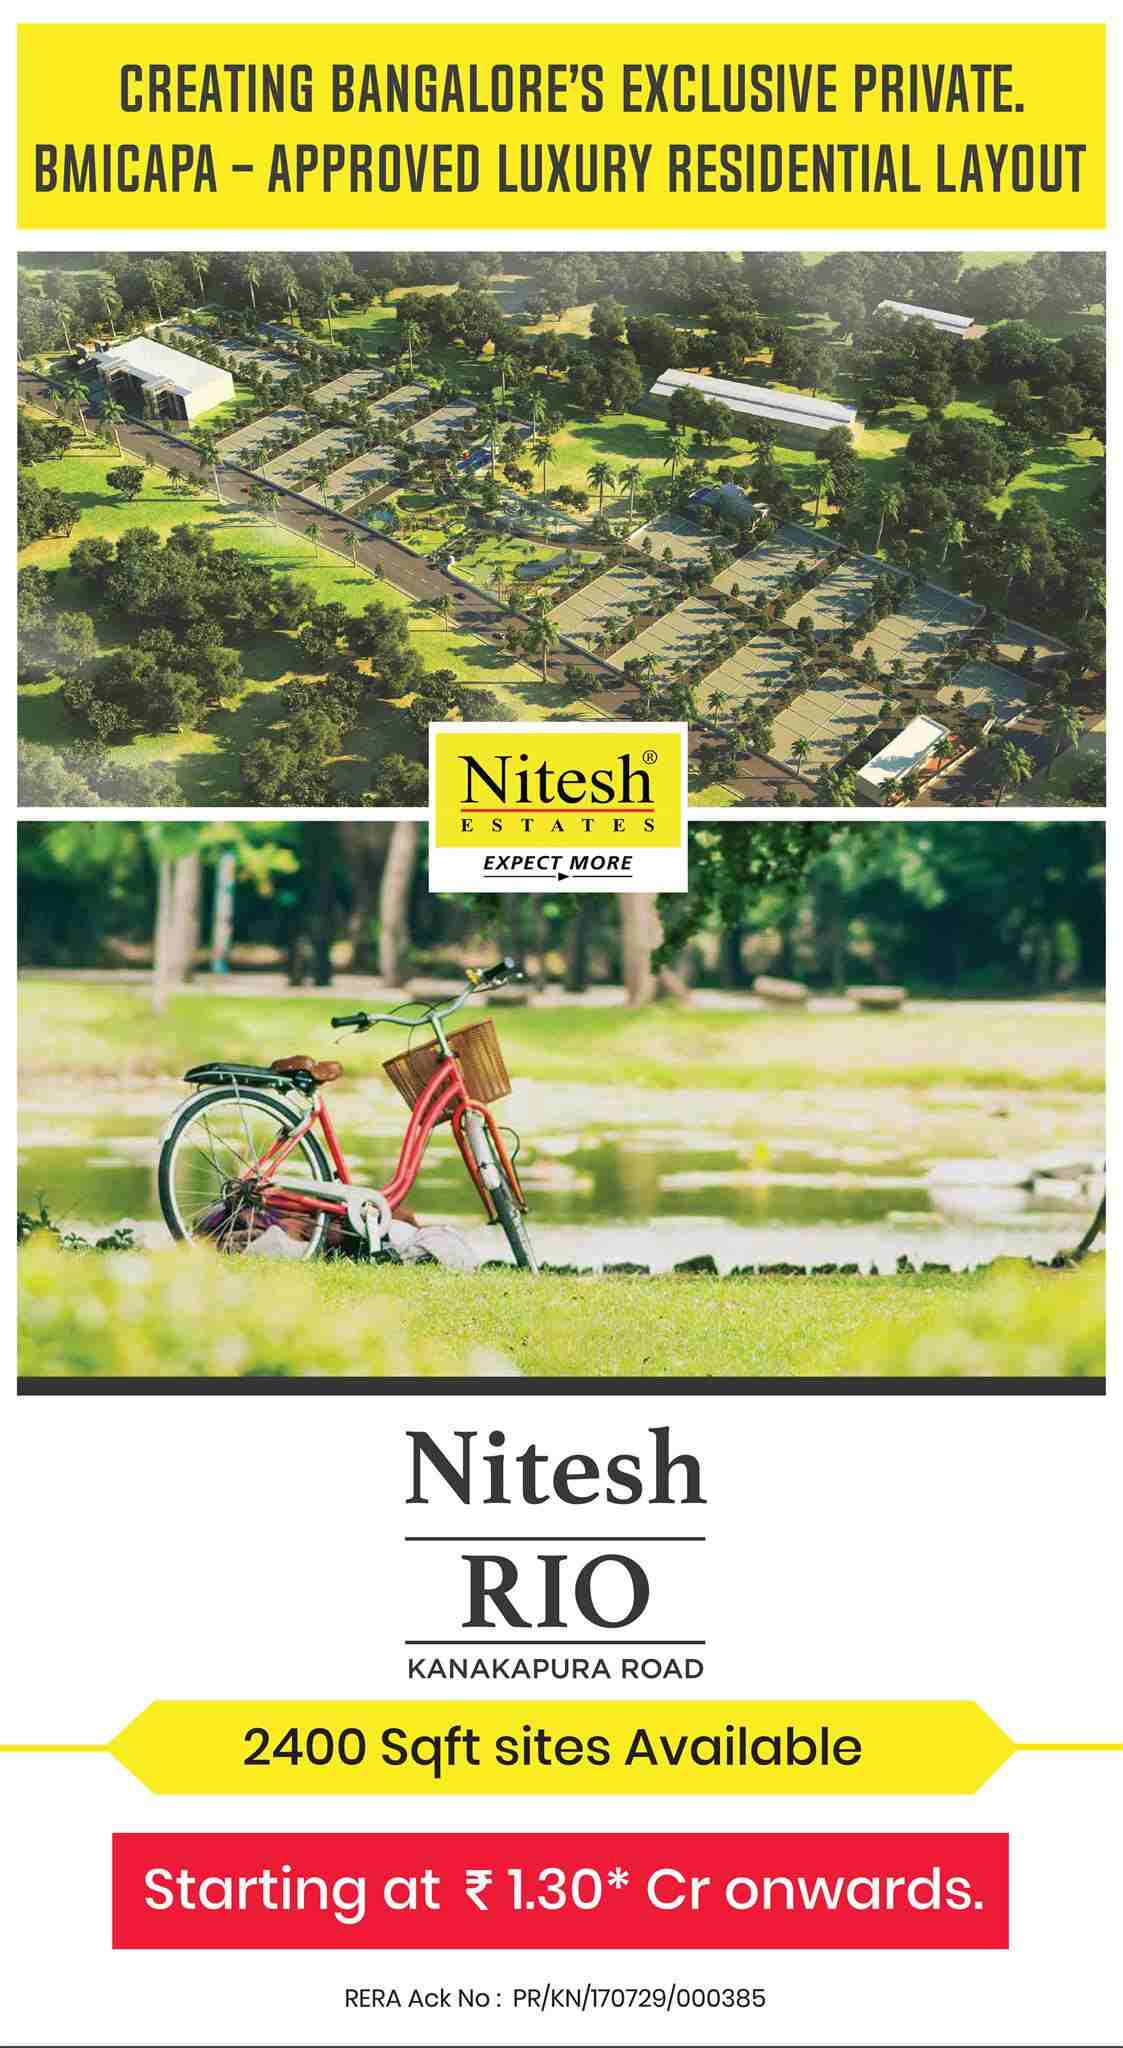 Nitesh Rio creating Bangalore's exclusive private Update